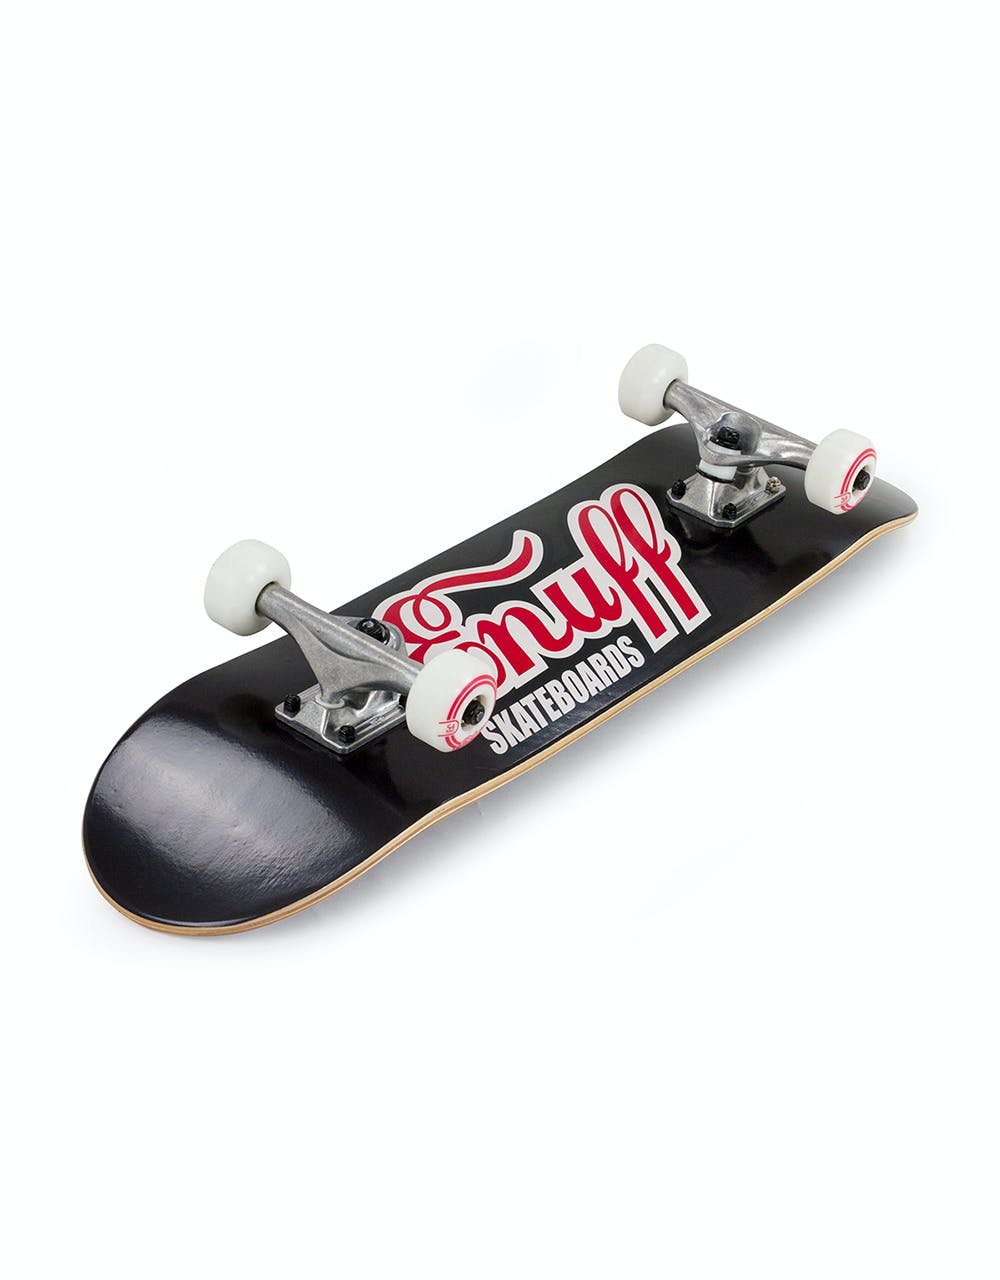 Enuff Classic Logo Complete Skateboard - 7.75"